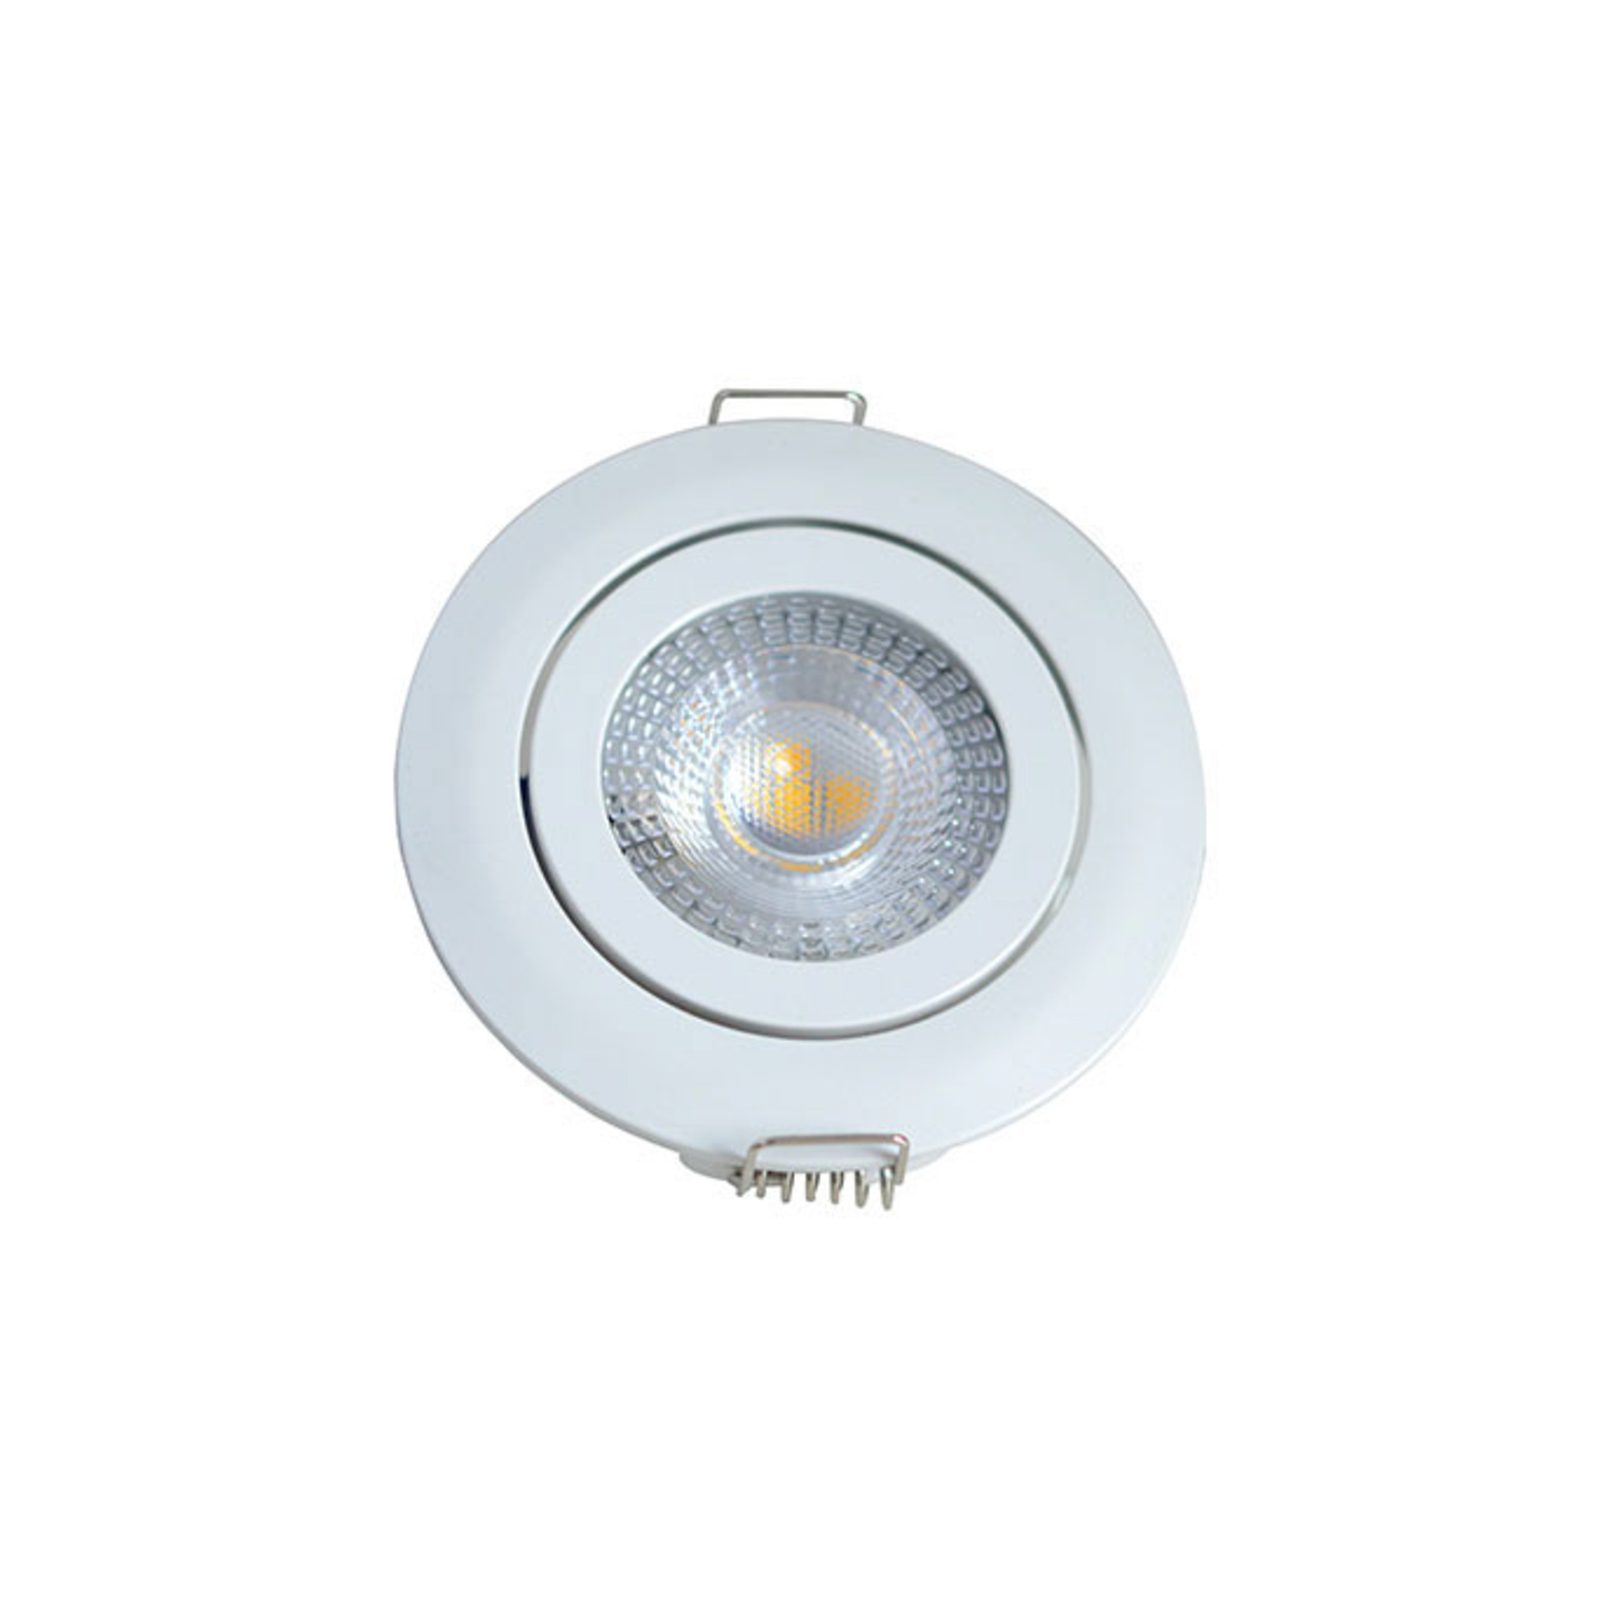 Luminaire encastrable LED Holstein MS, IP20 40°, blanc